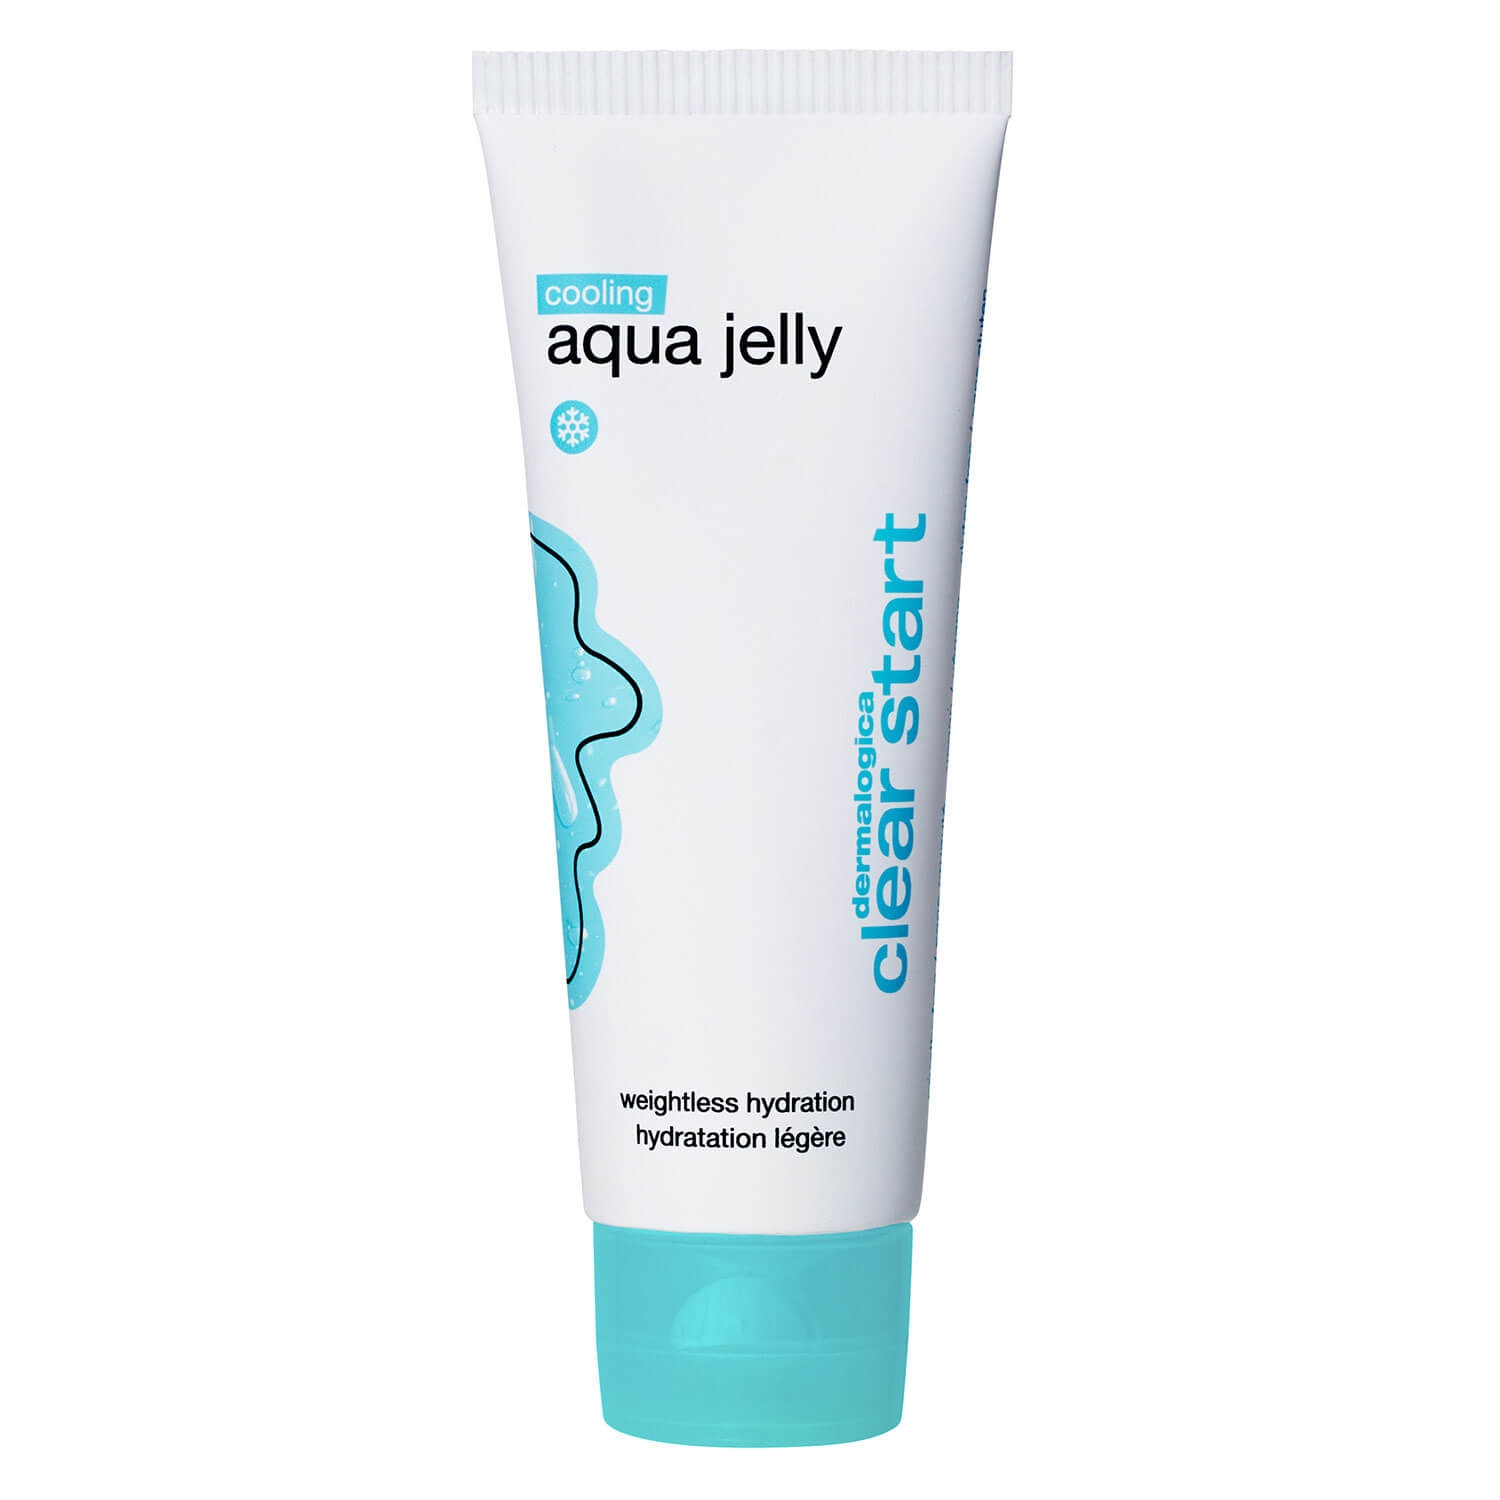 Produktbild von Moisturizers - Cooling Aqua Jelly